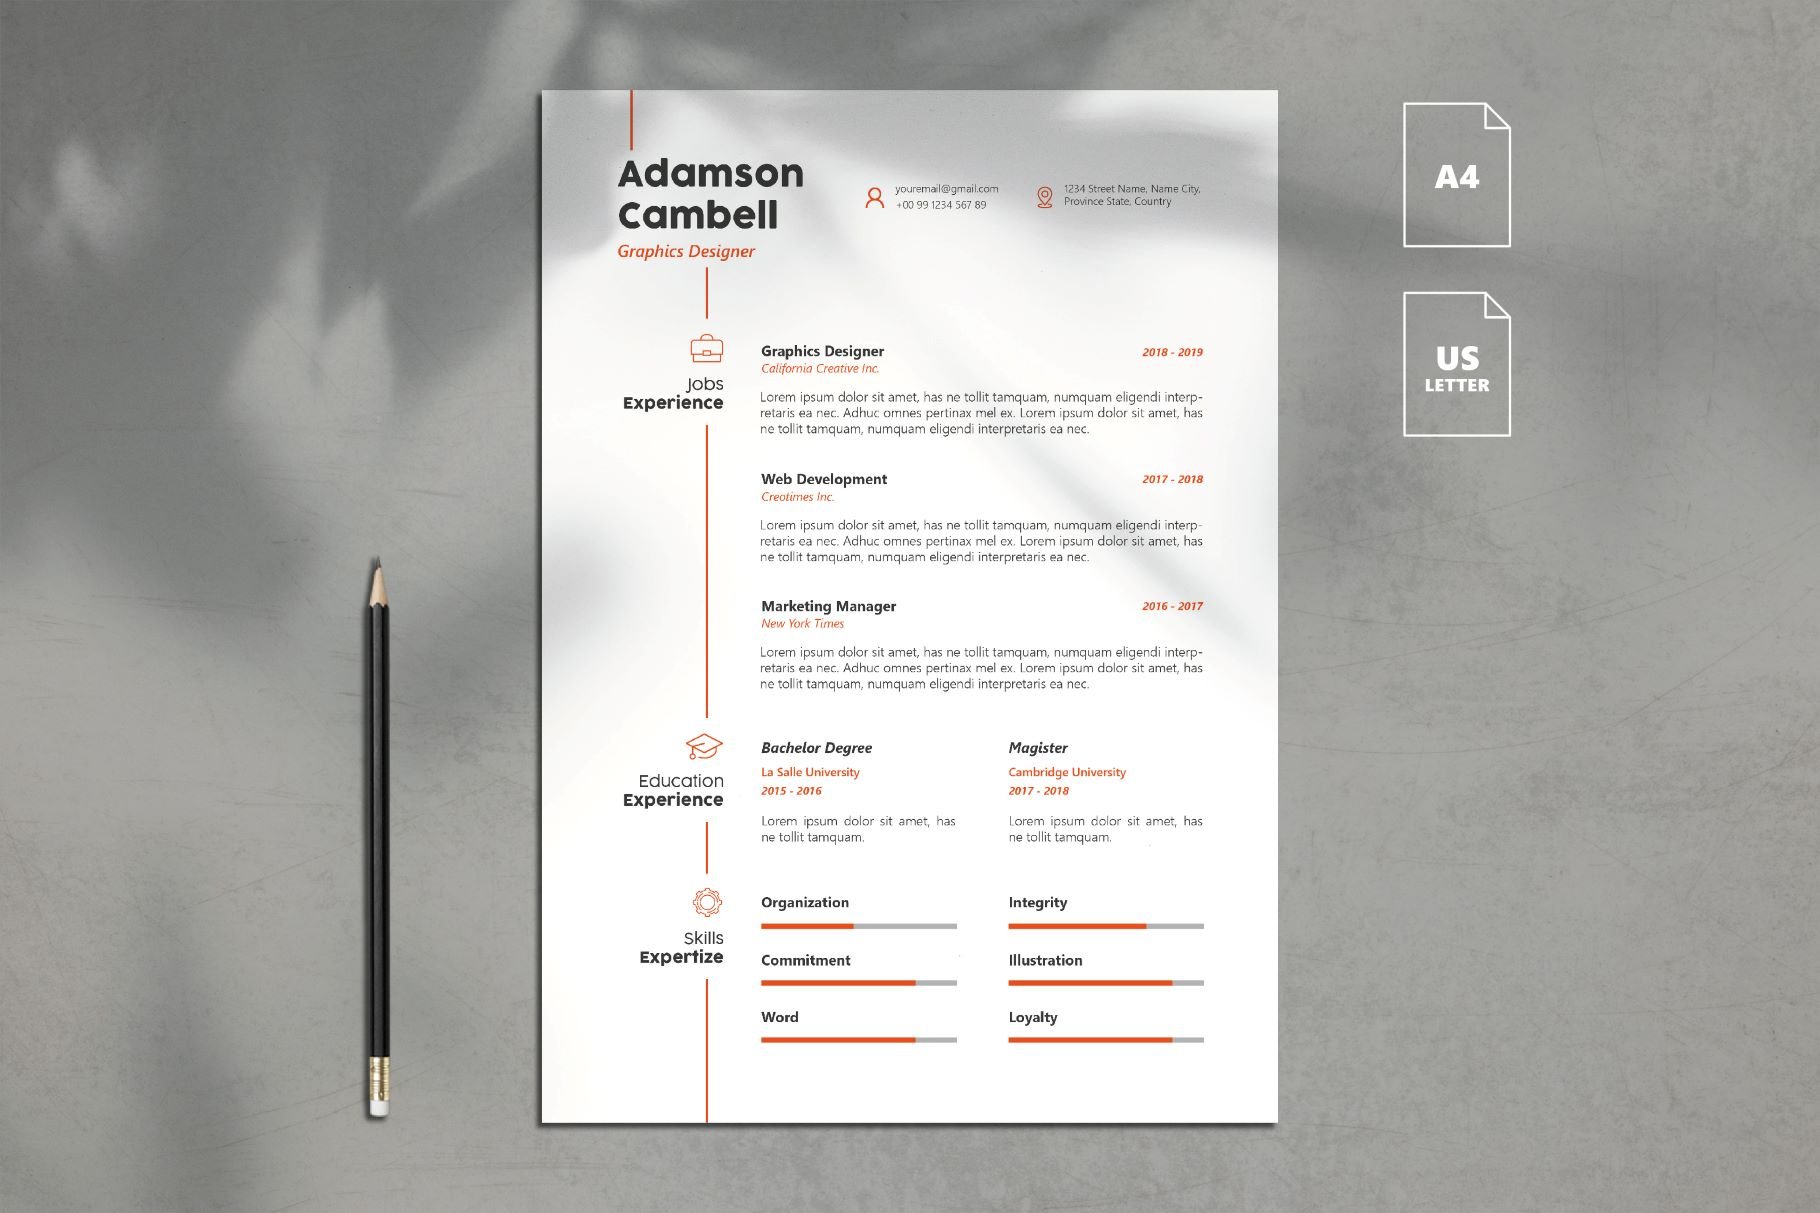 Minimalist Resume Template Vol. 9 cover image.